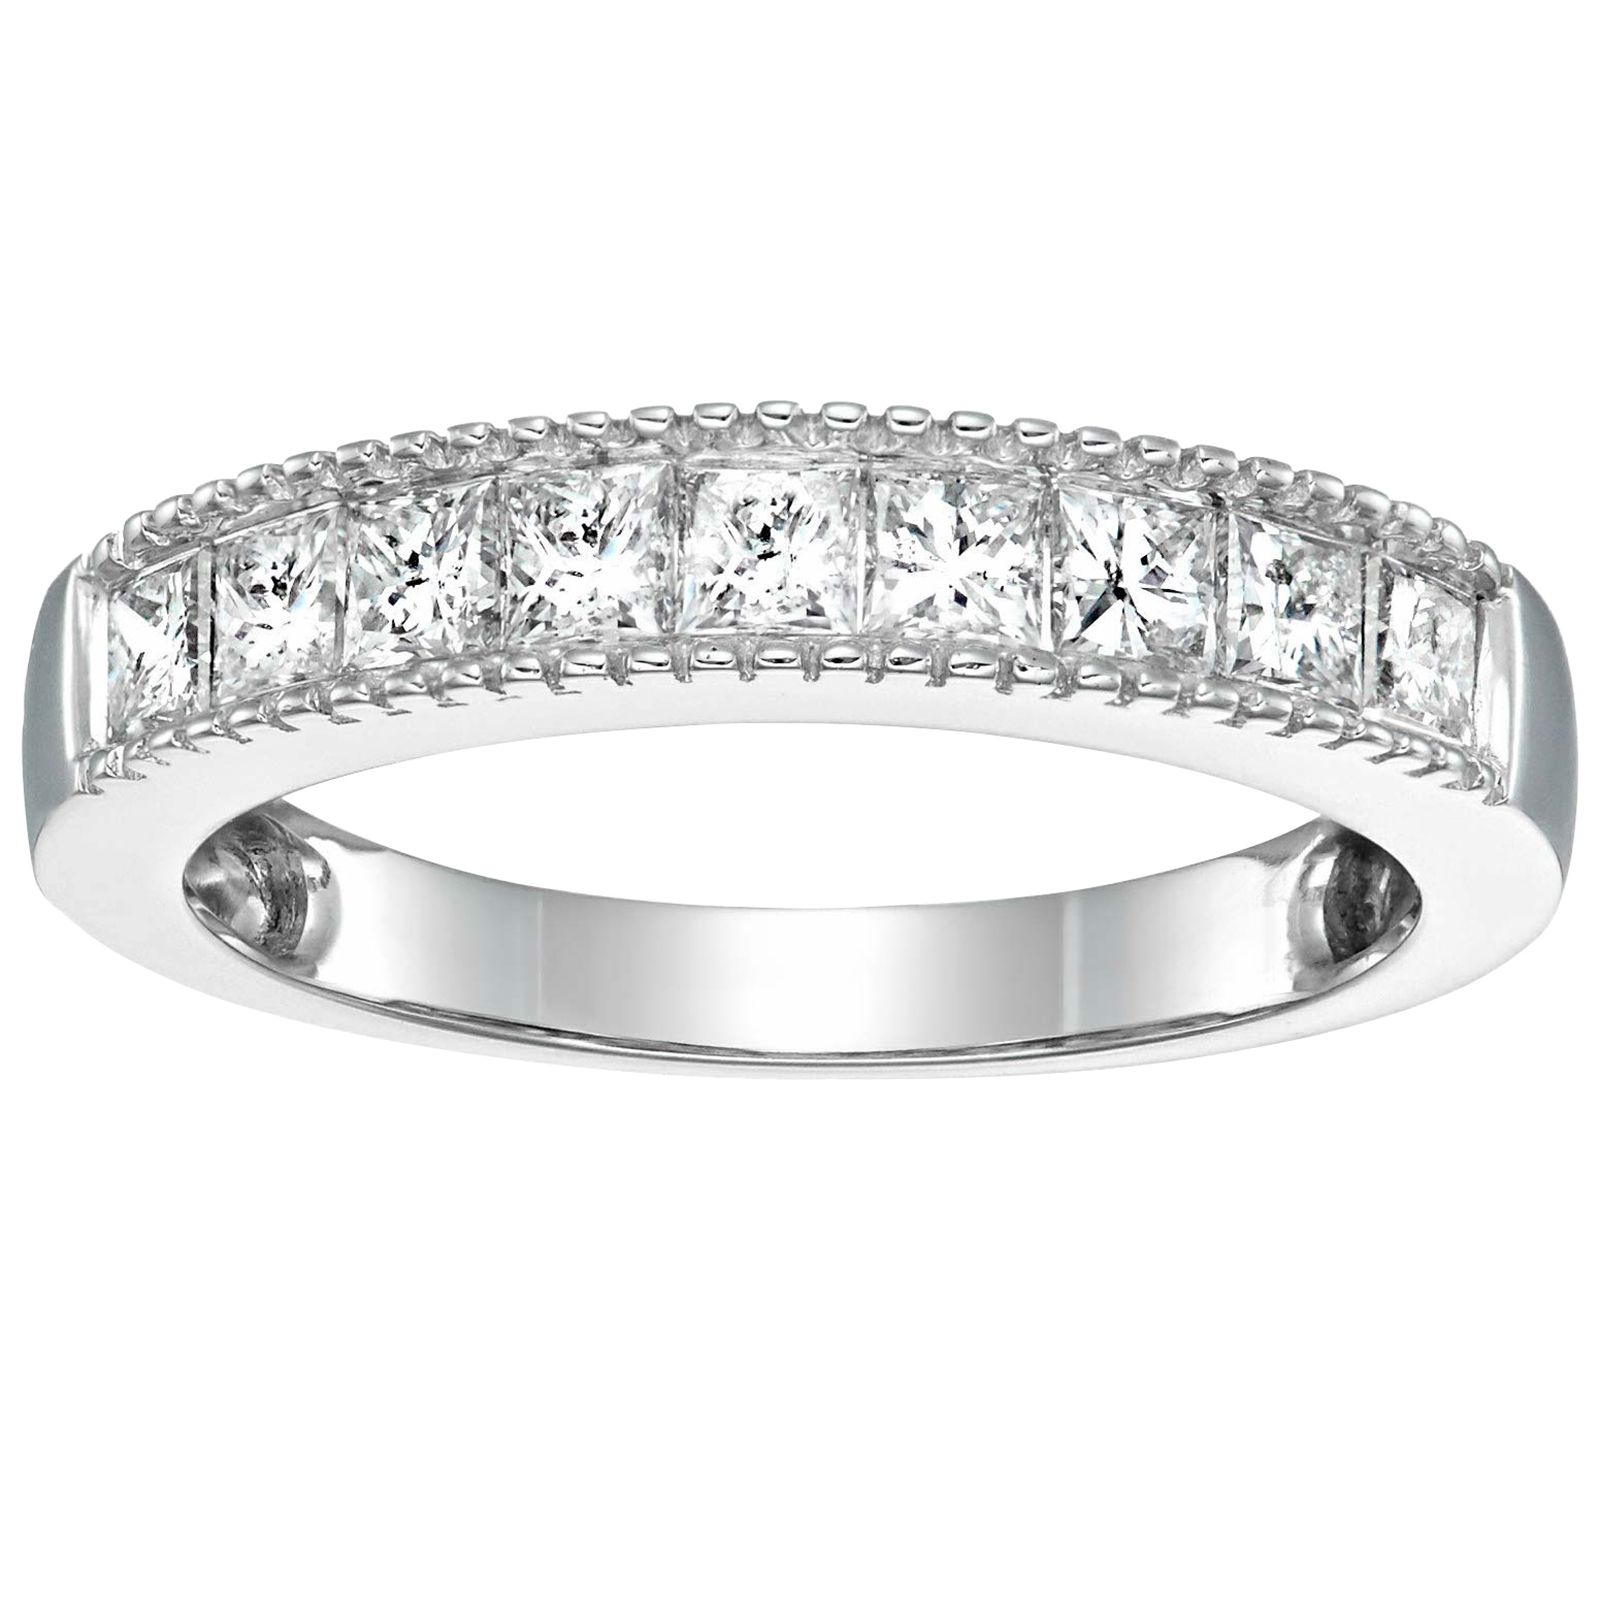 Amairah 1 ct. t.w. Princess Cut Milgrain Diamond Wedding Band in 14k White Gold, Size 5